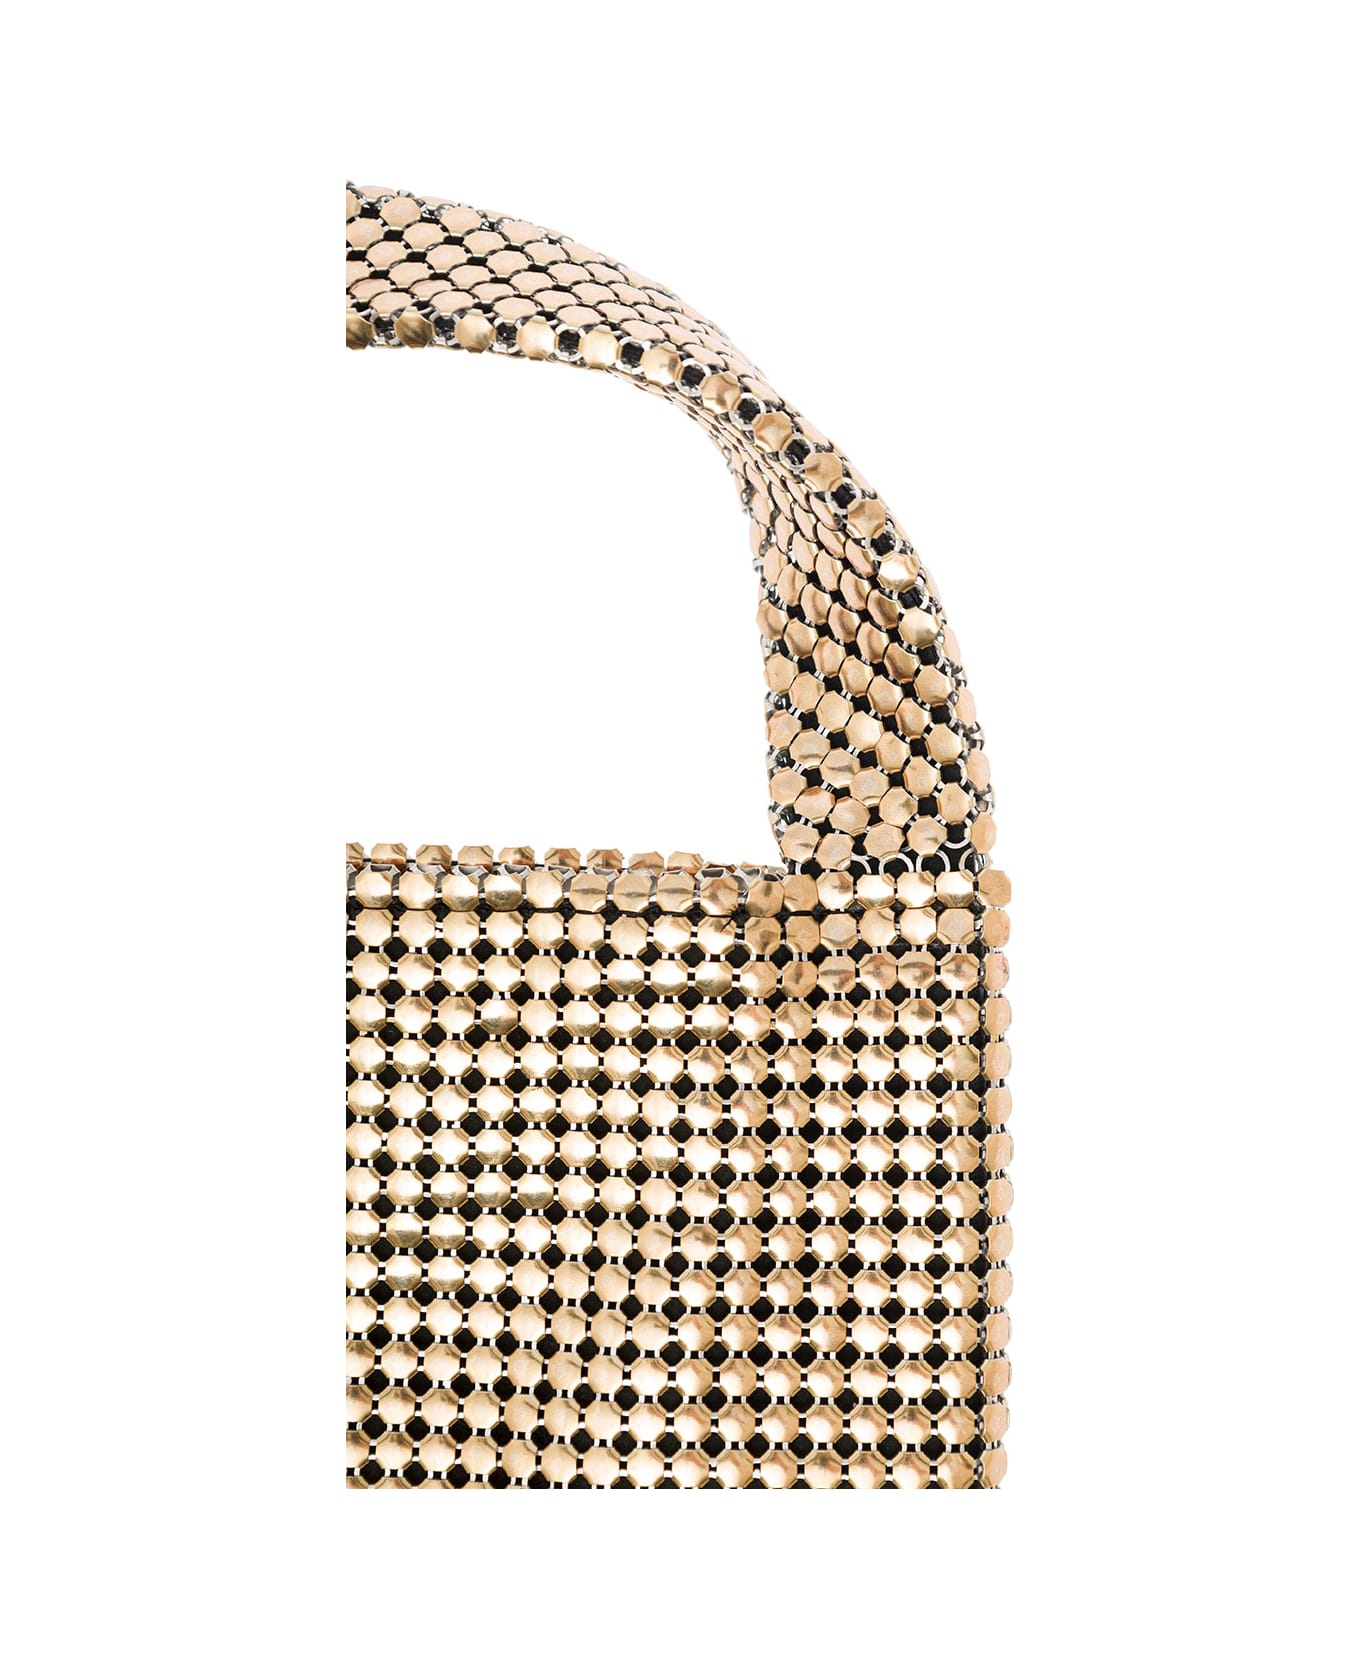 Paco Rabanne 'pixel' Gold-tone Tote Bag In Metallic Mesh Woman - Metallic